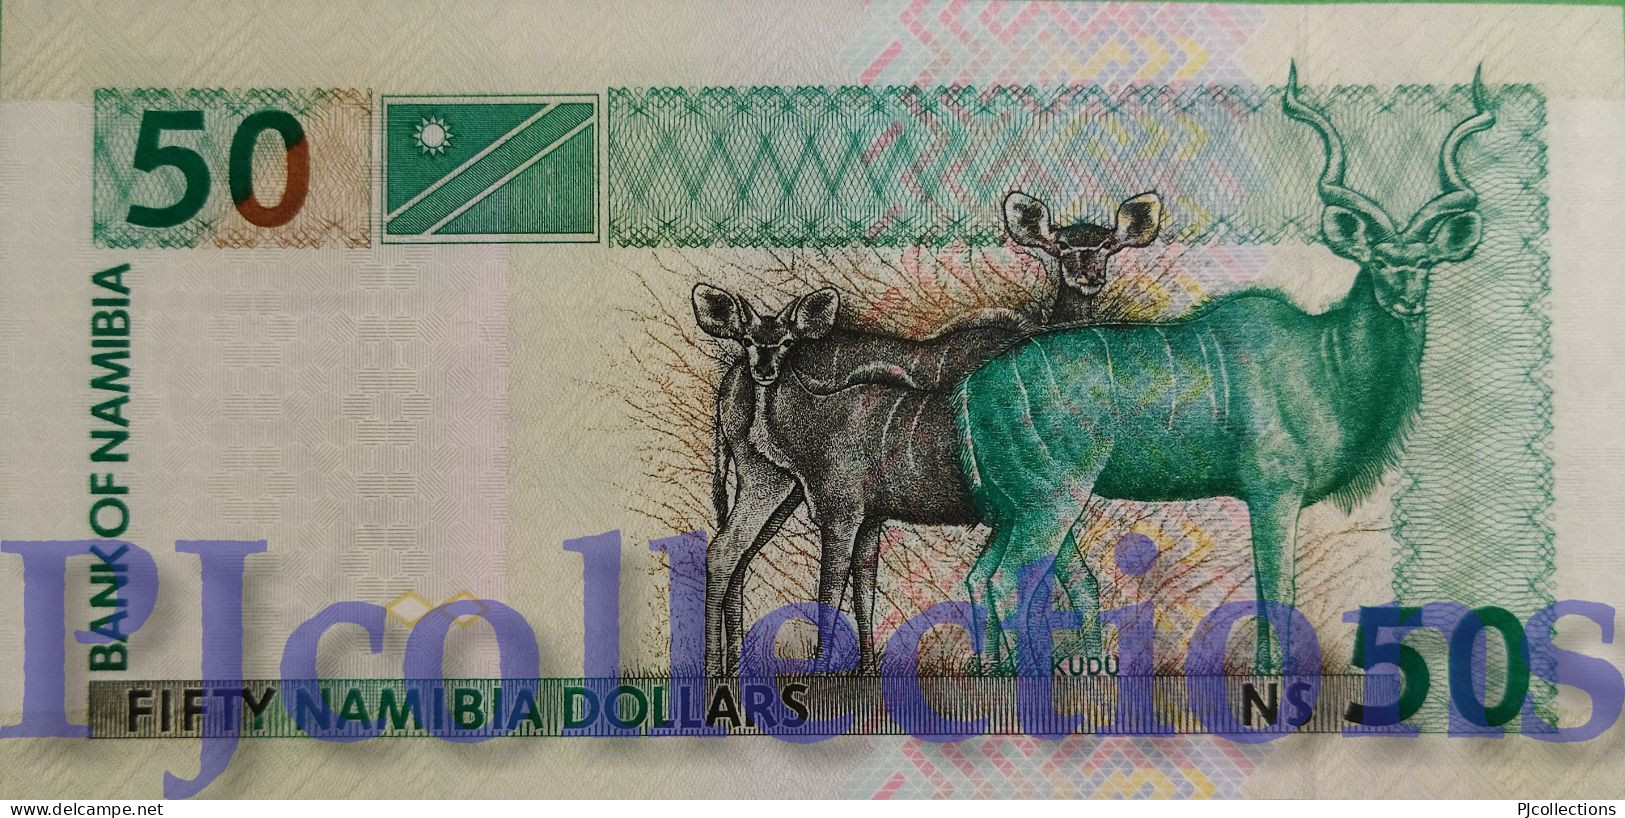 NAMIBIA 50 DOLLARS 1999 PICK 7a UNC - Namibie